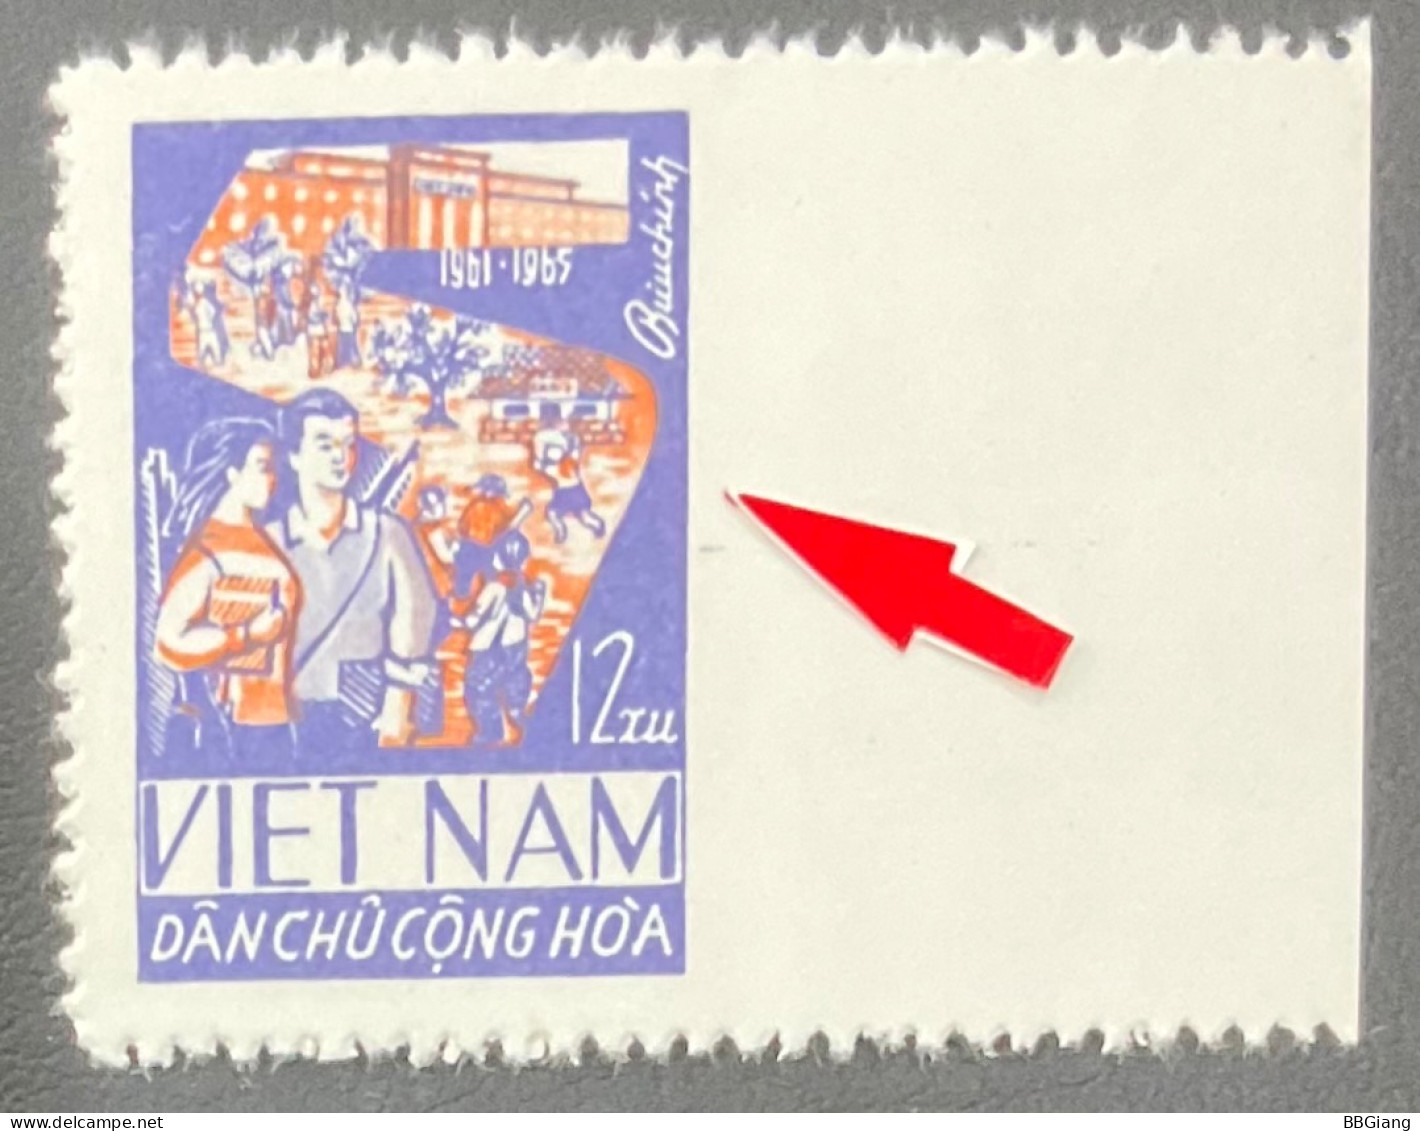 Nord VietNam Error Stamps, Missing Perforate. - Vietnam